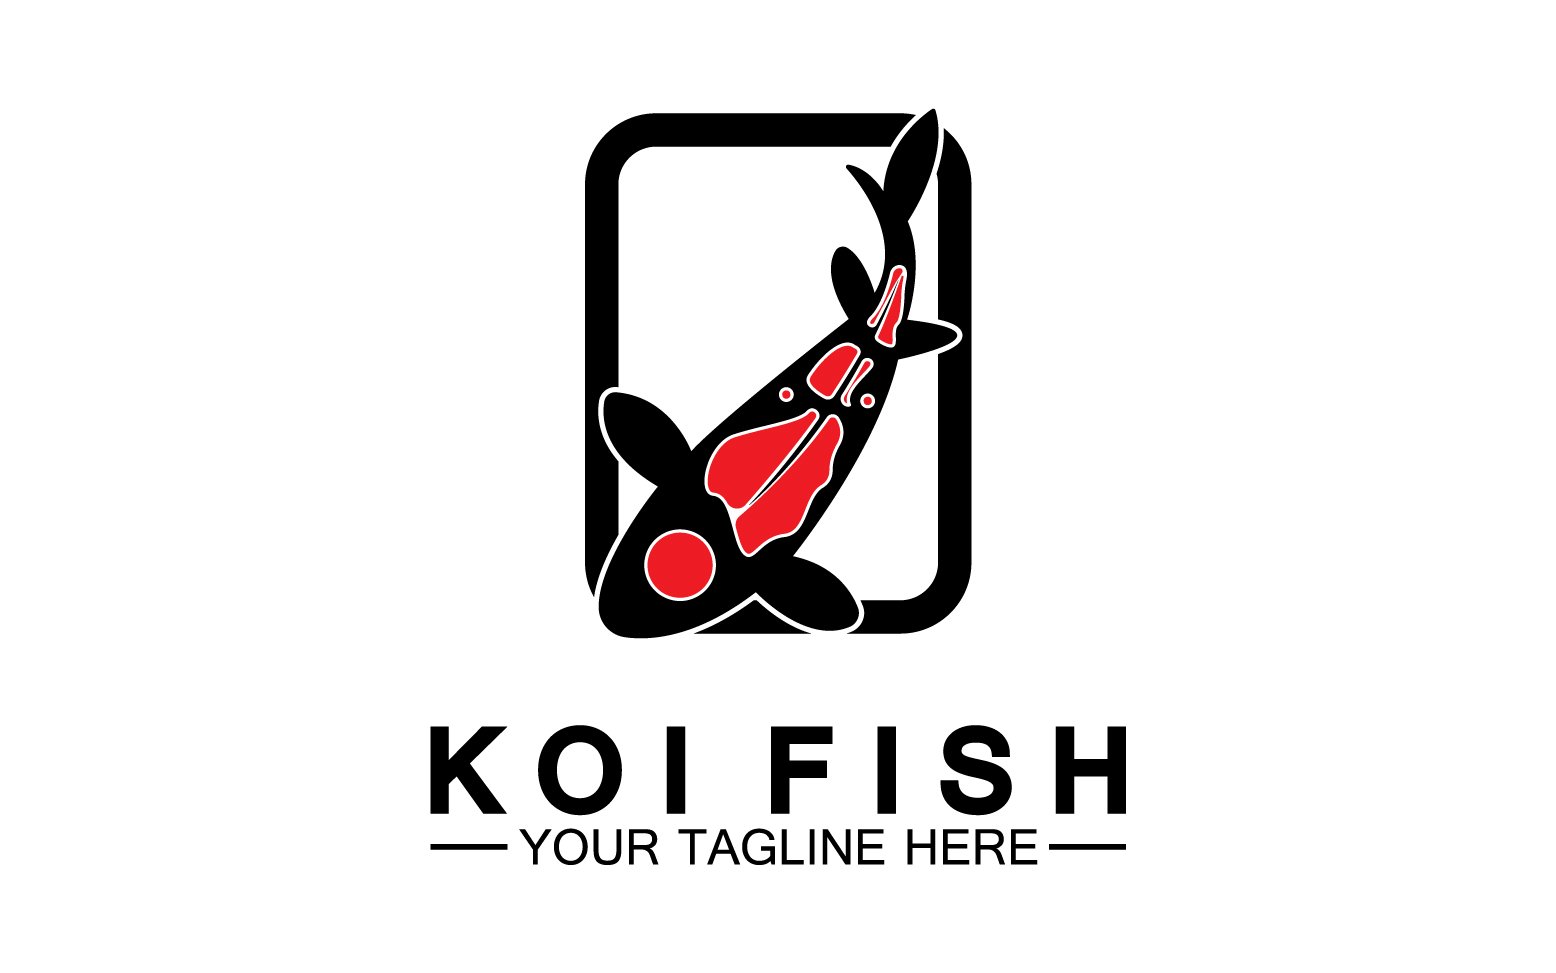 Fish koi black and red icon logo vector v33